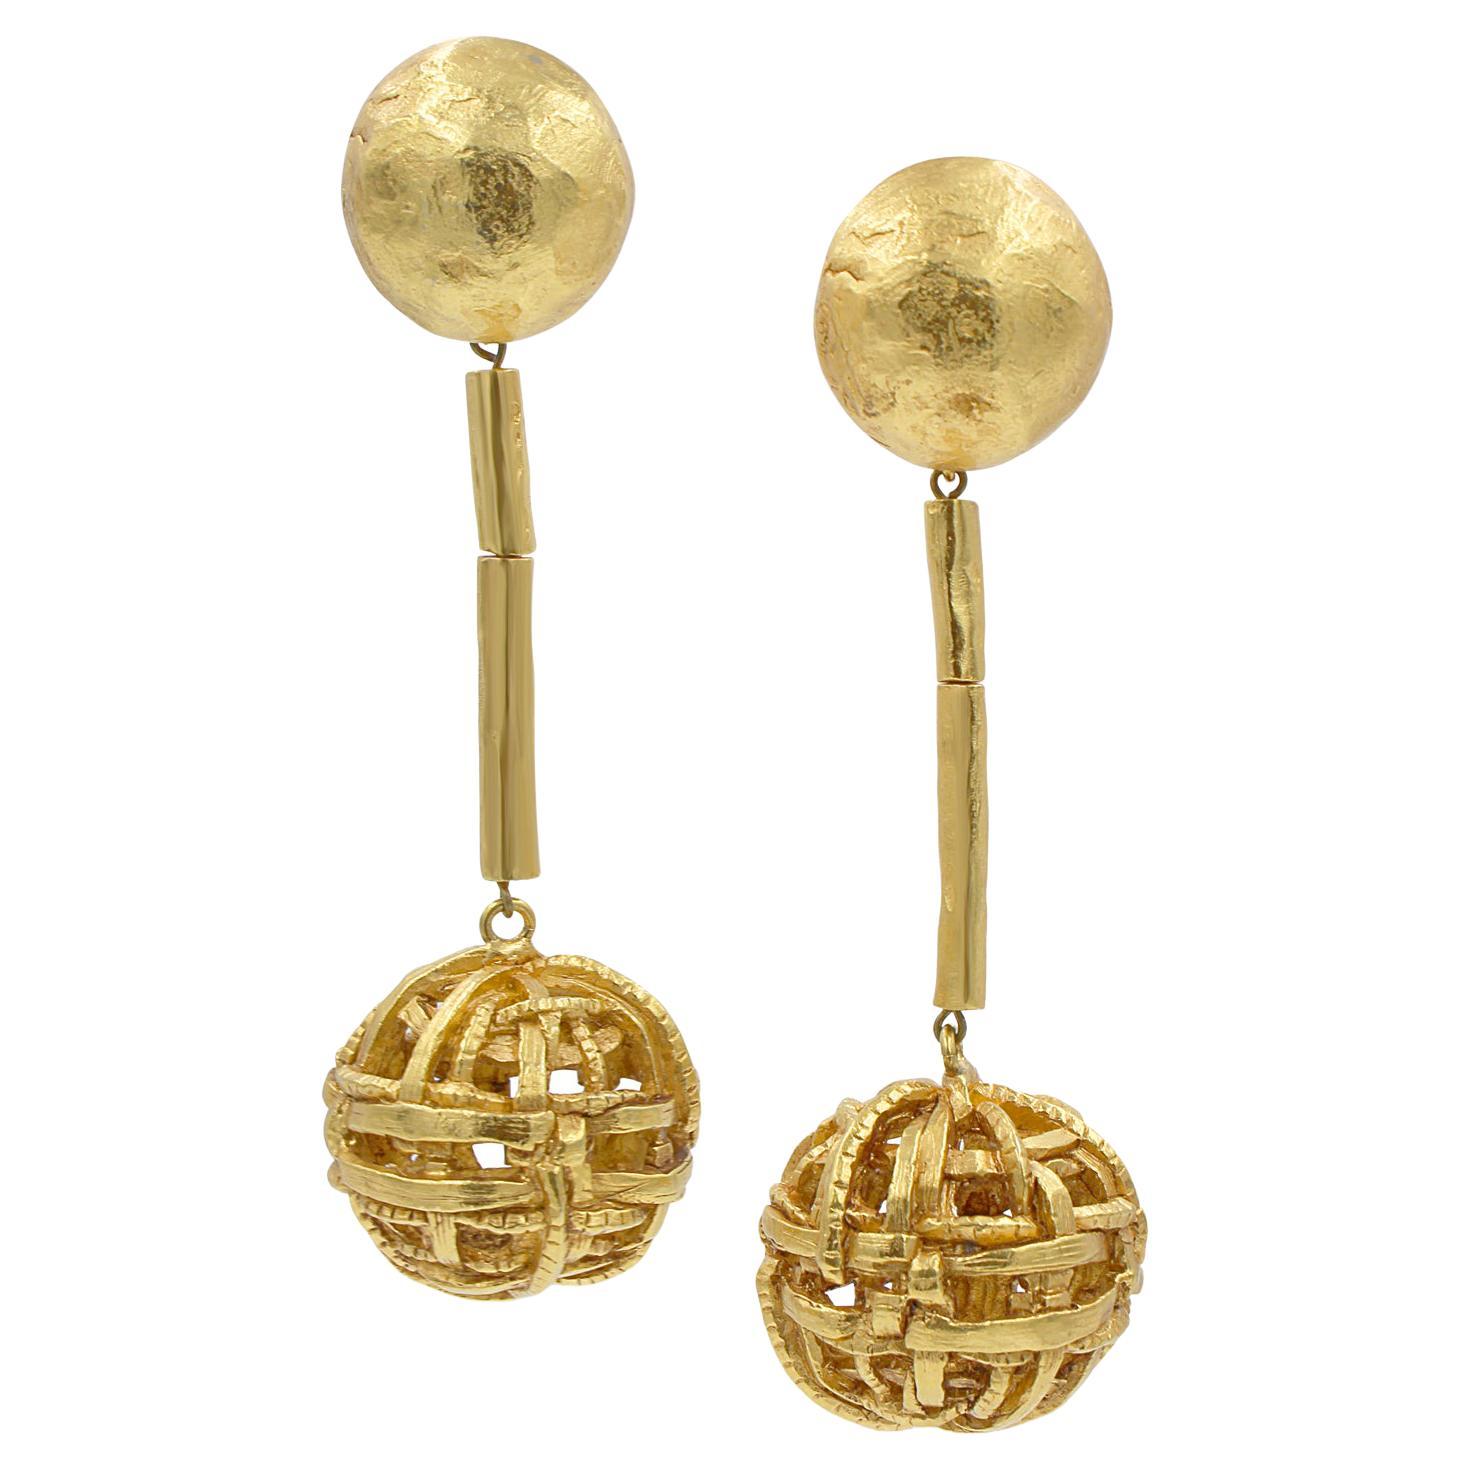 Vintage Christian Lacroix Gold Tone Dangling Ball Earrings, Circa 1990s